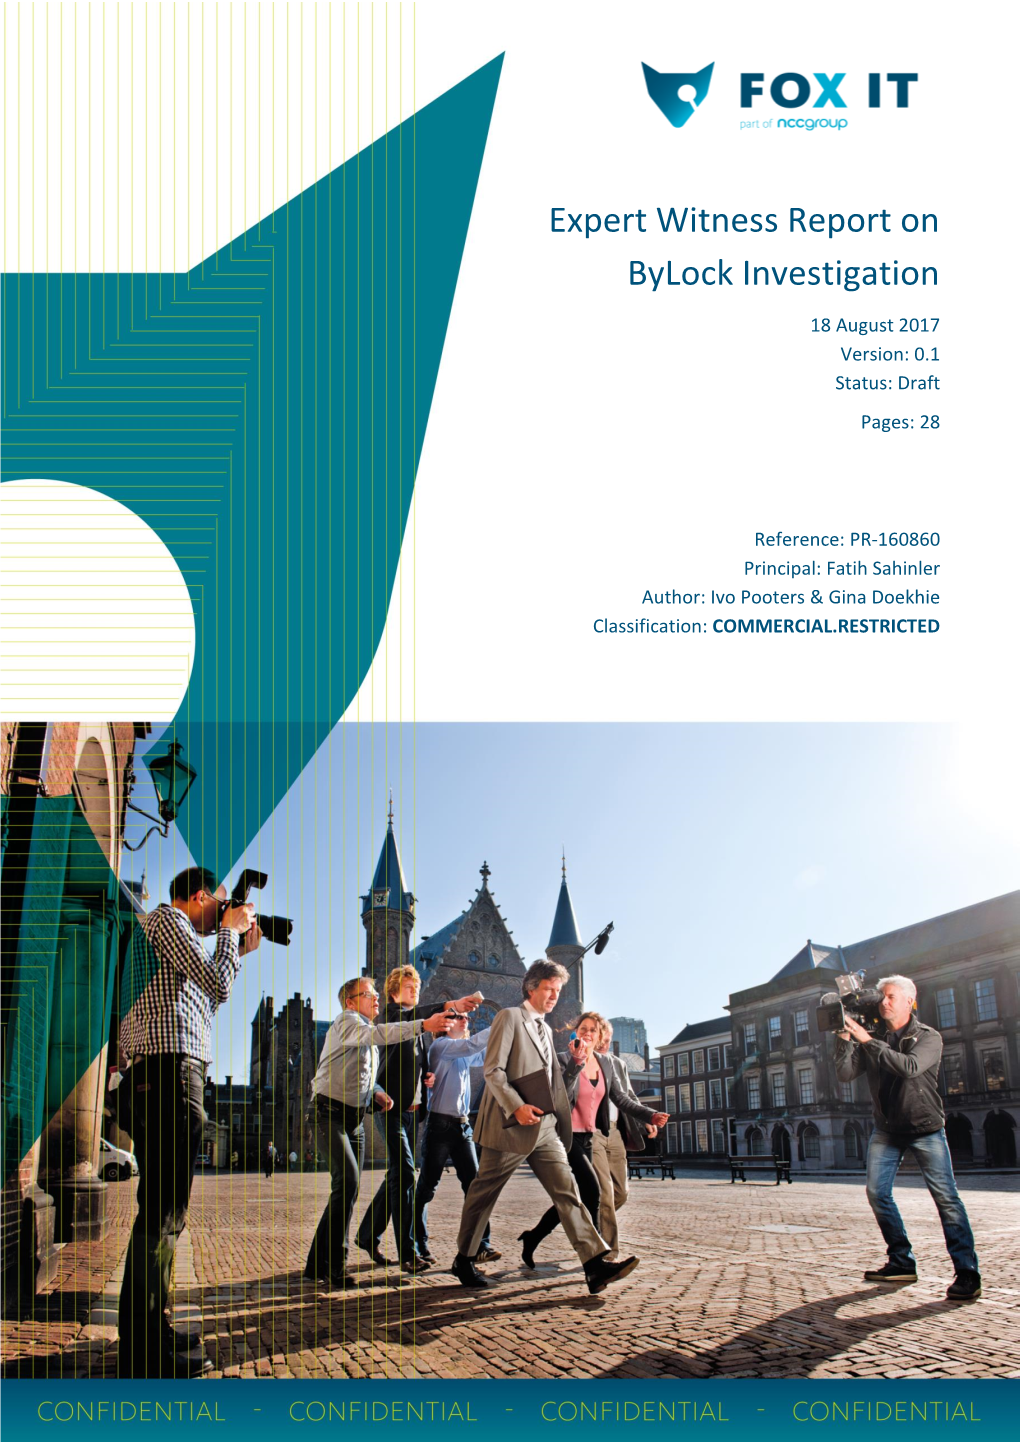 Expert Witness Report on Bylock Investigation